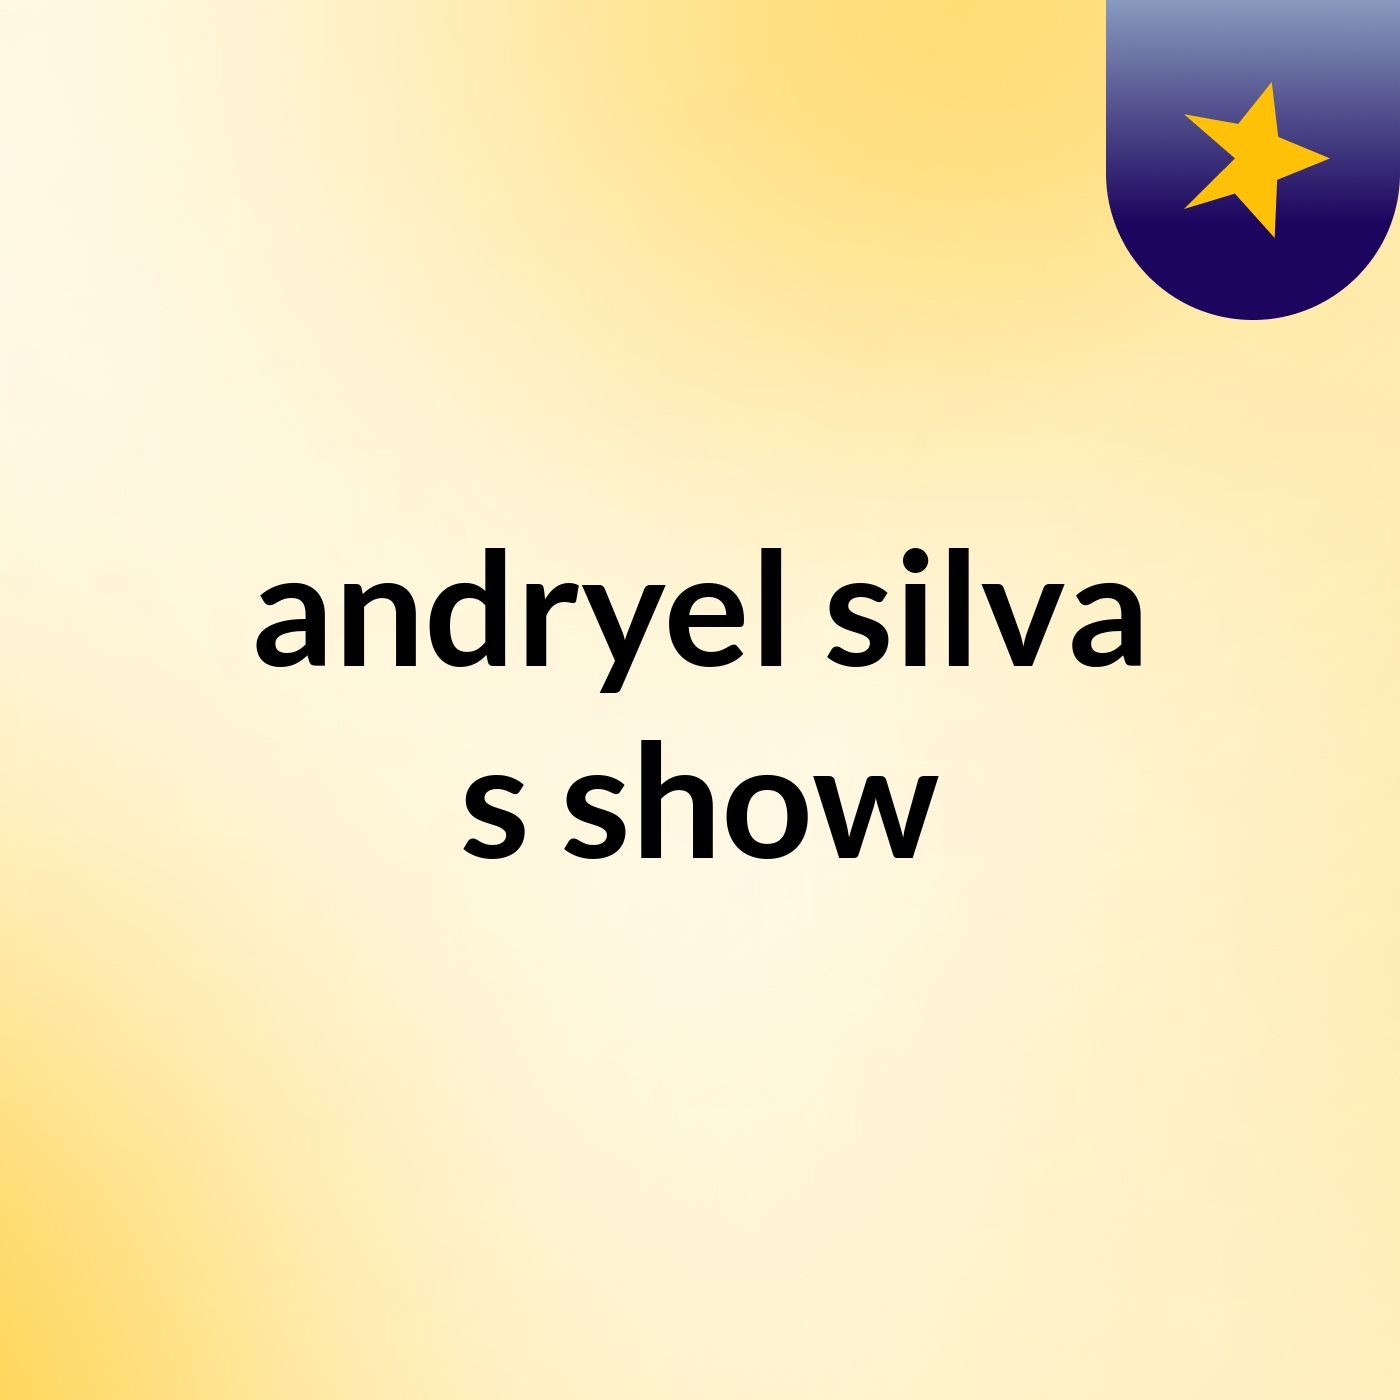 andryel silva's show